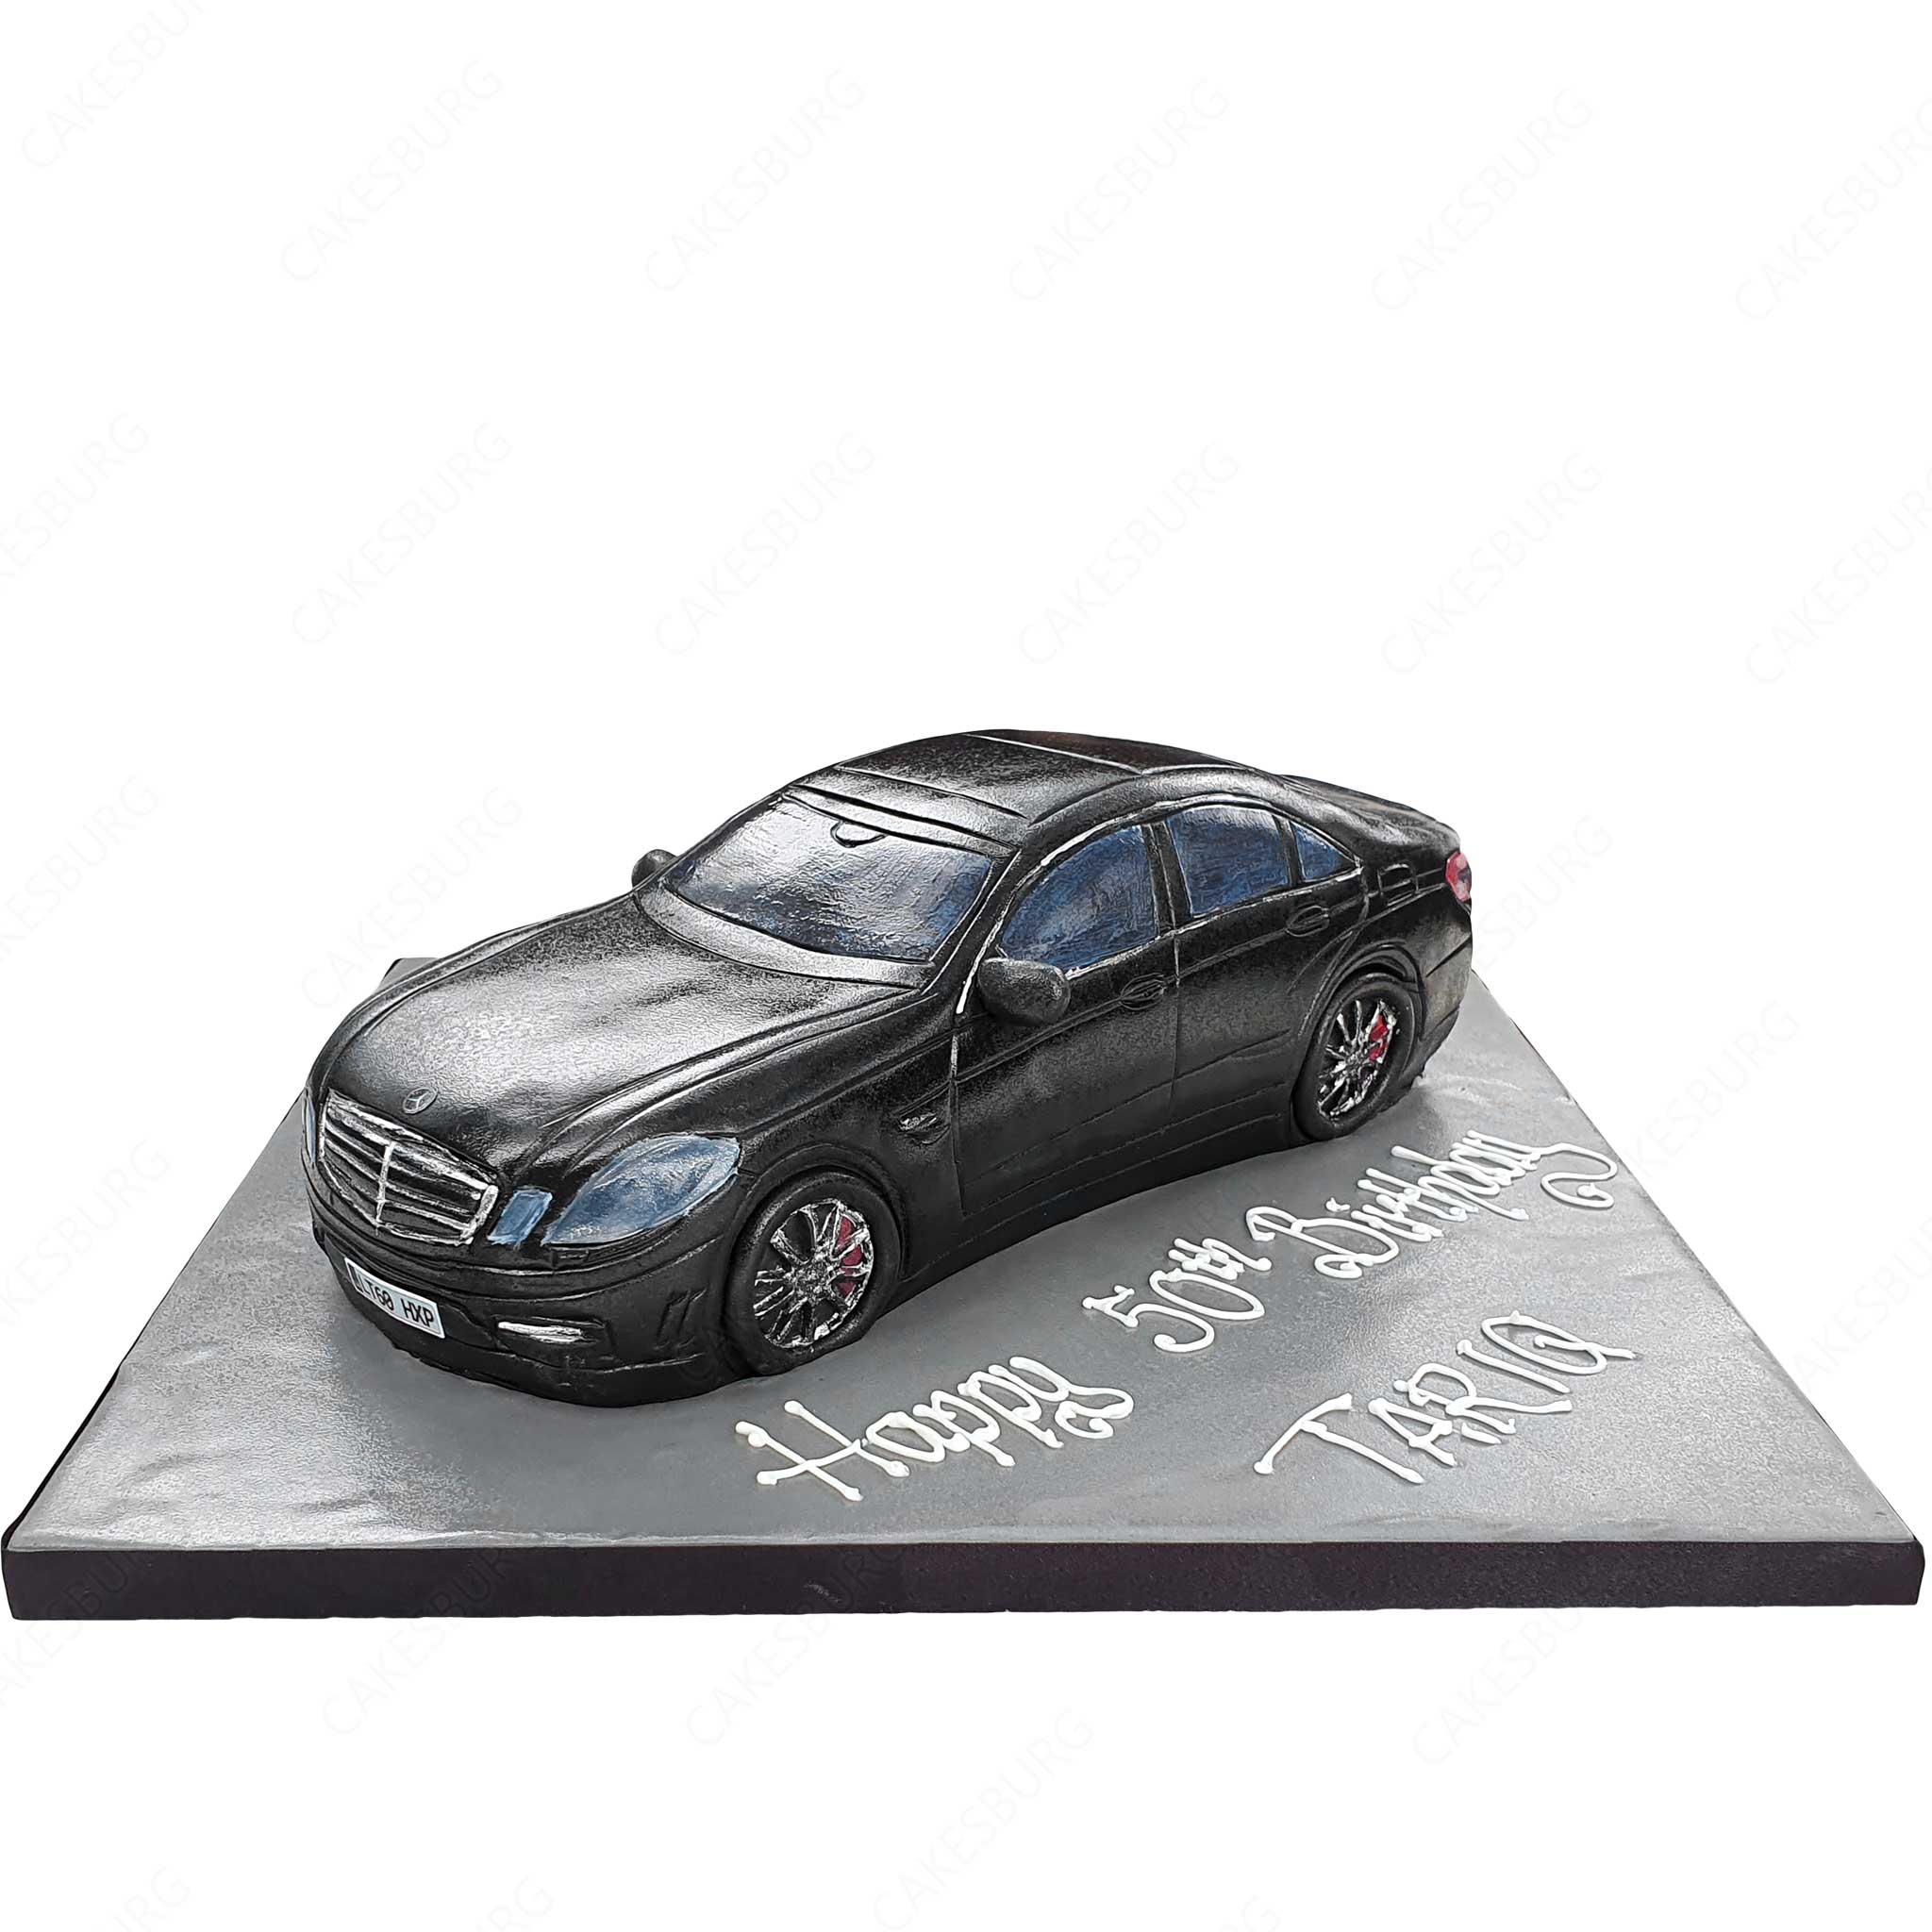 Distant Mercedes Benz G-Class Cake- Order Online Distant Mercedes Benz  G-Class Cake @ Flavoursguru